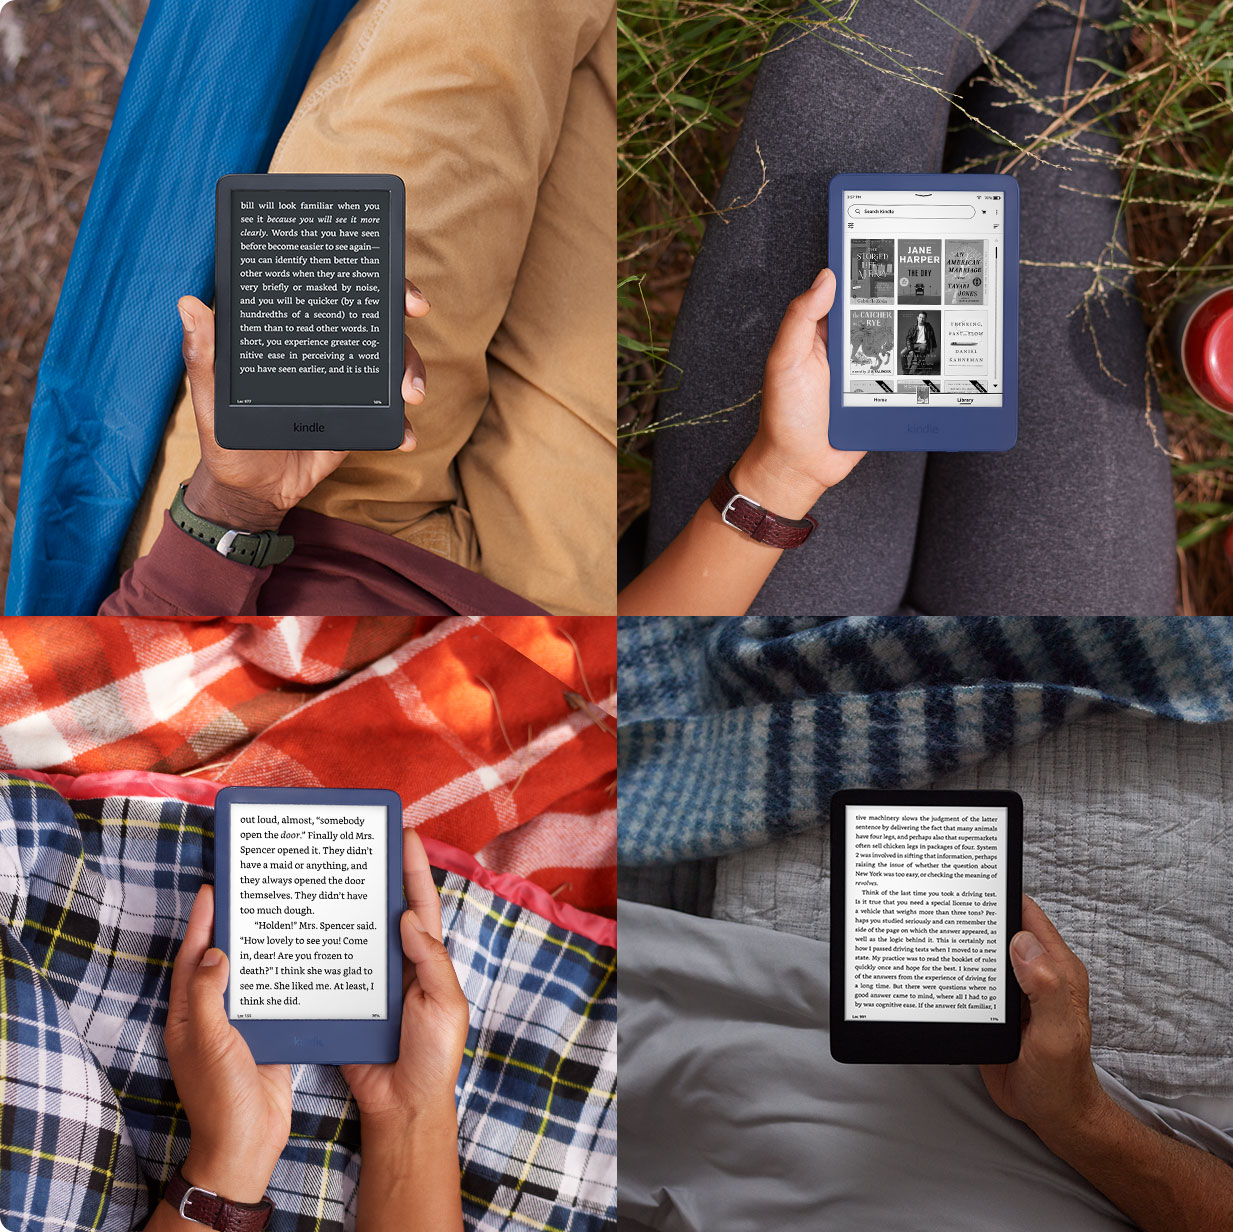 E-reader All-new Kindle 2022 16GB Negro + Funda Diseño Azul